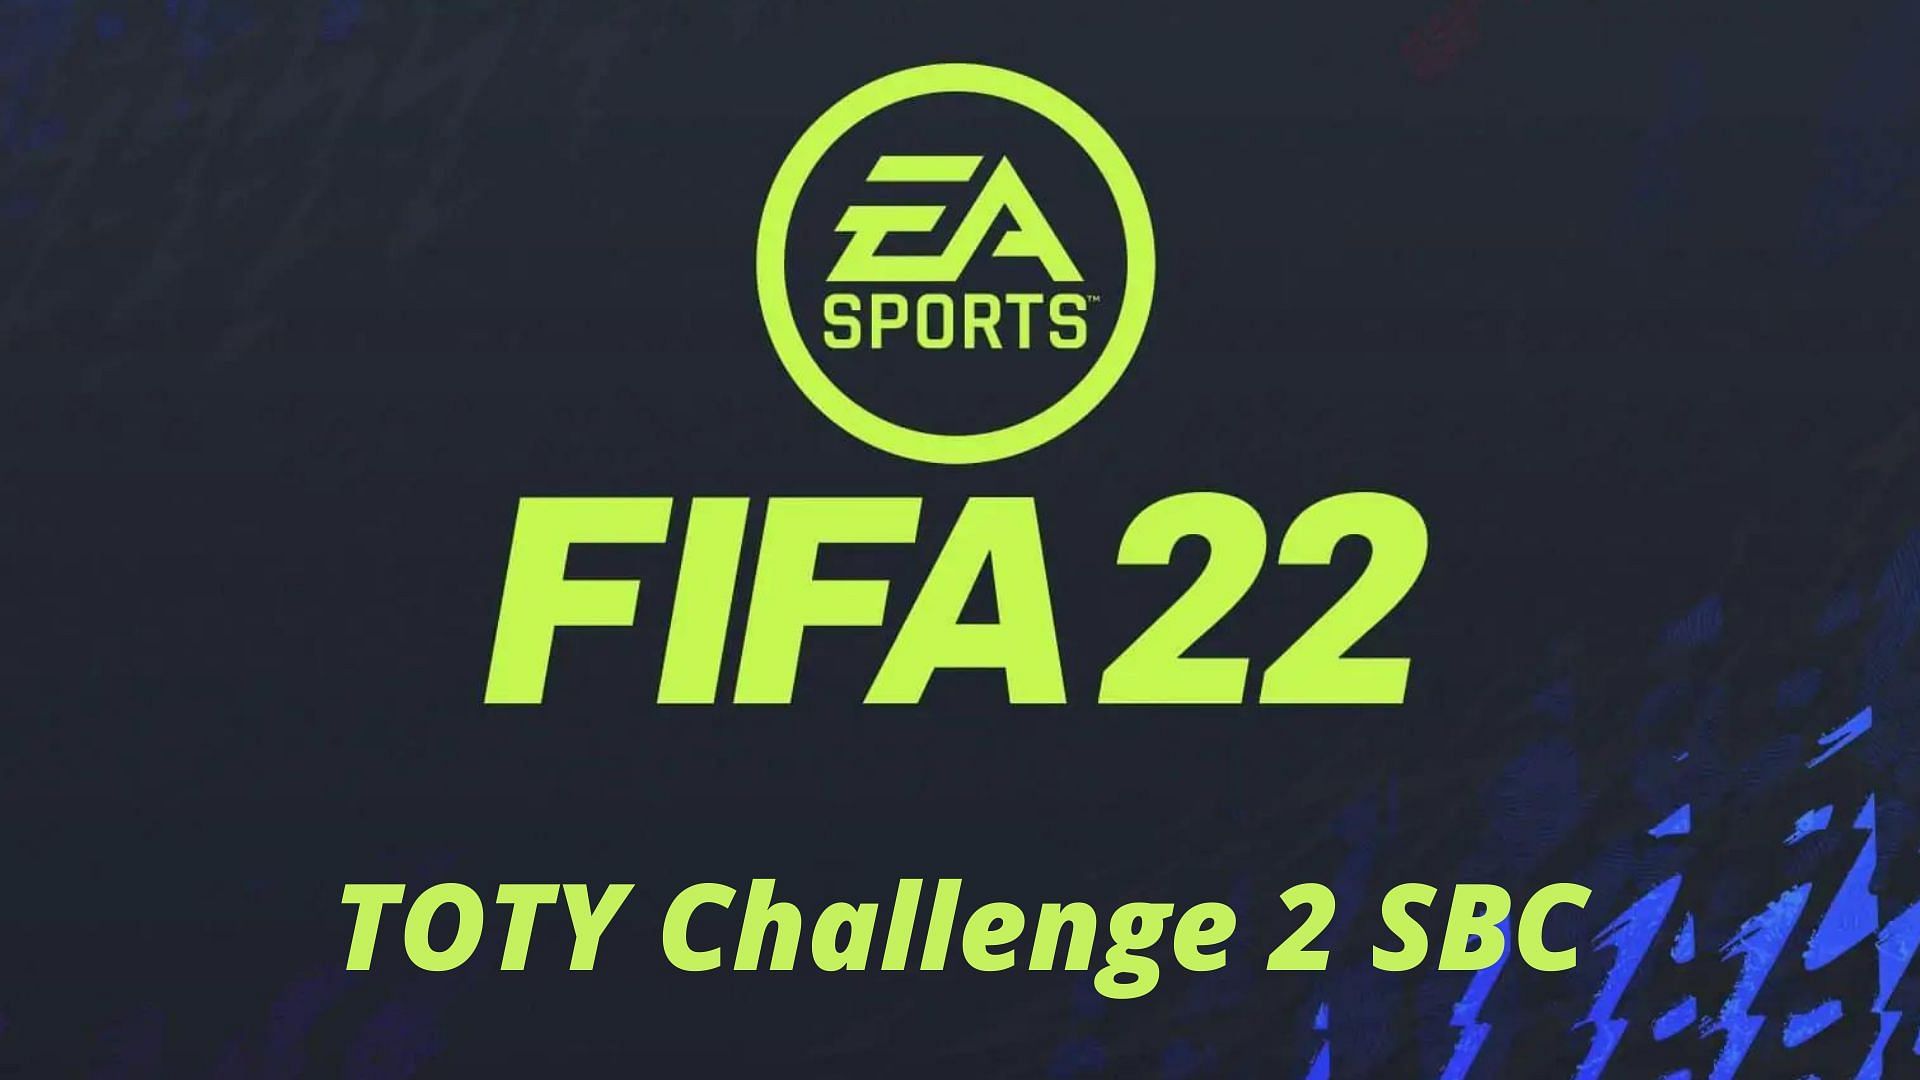 TOTY Challenge 2 SBC is now live in FIFA 22 (Image via Sportskeeda)